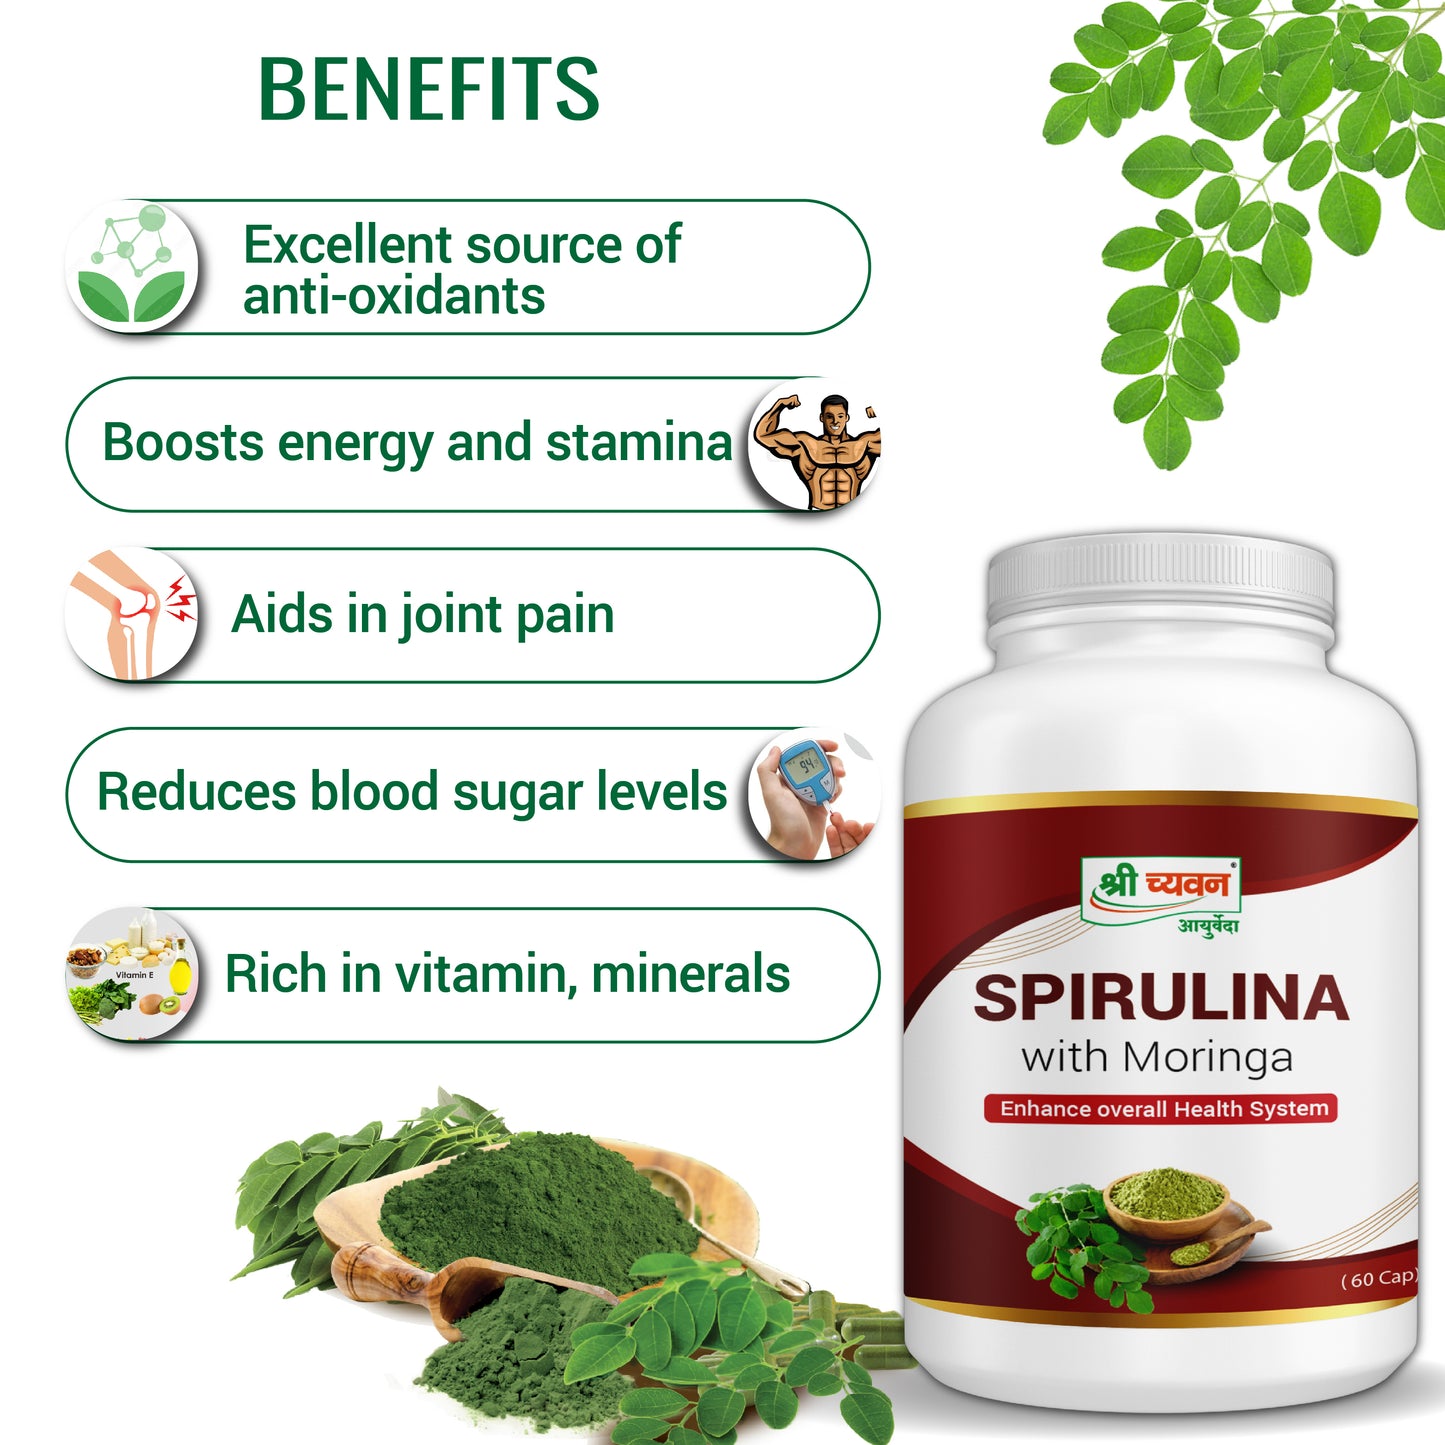 Spirulina Capsule Moringa Benefits